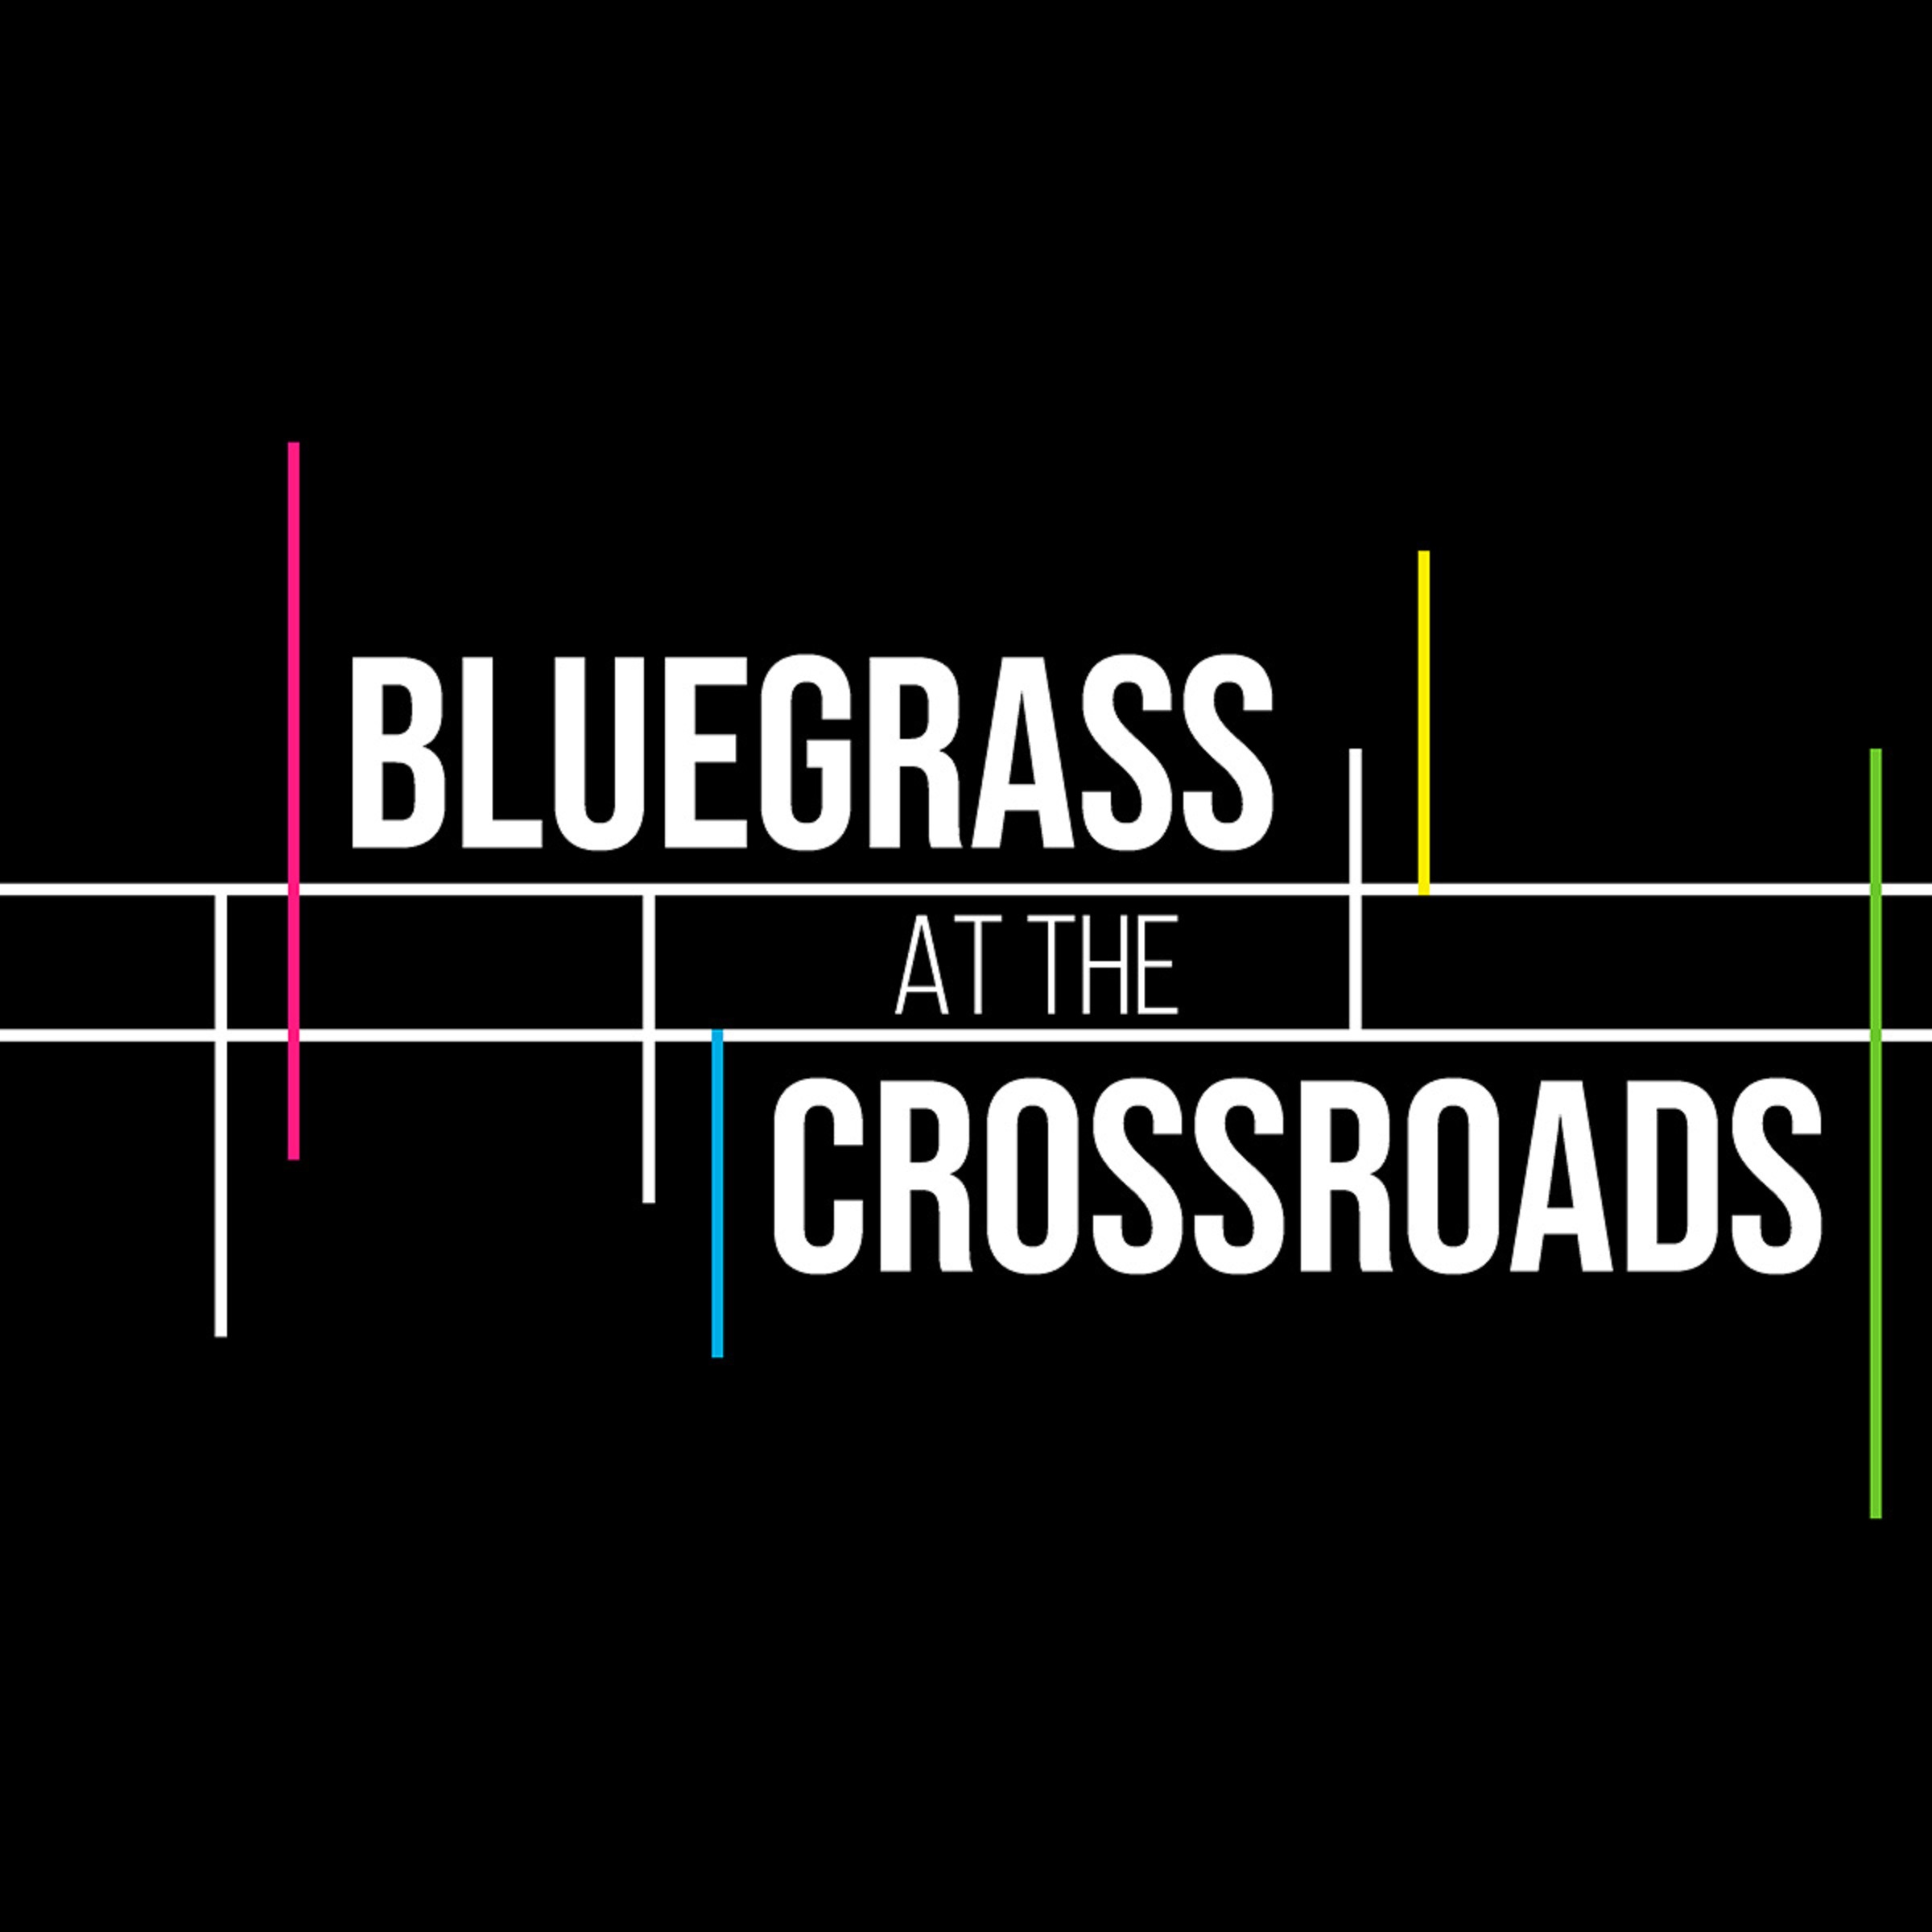 Bluegrass at the Crossroads album spotlights creative musical encounters